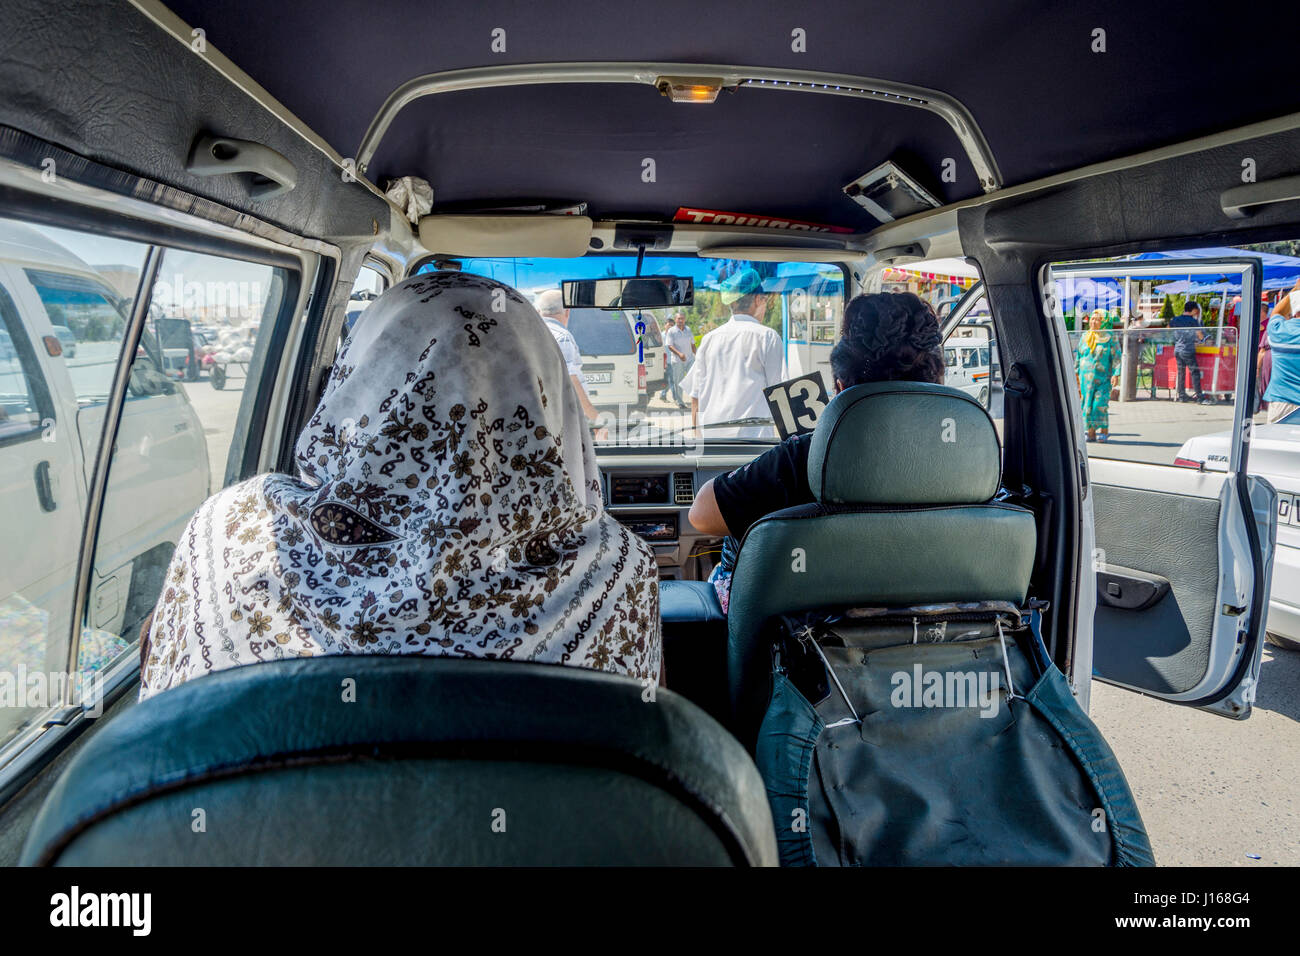 MARGILAN, UZBEKISTAN - AUGUST 20: First person view from the inside of Uzbek minibus called marshrutka. August 2016 Stock Photo